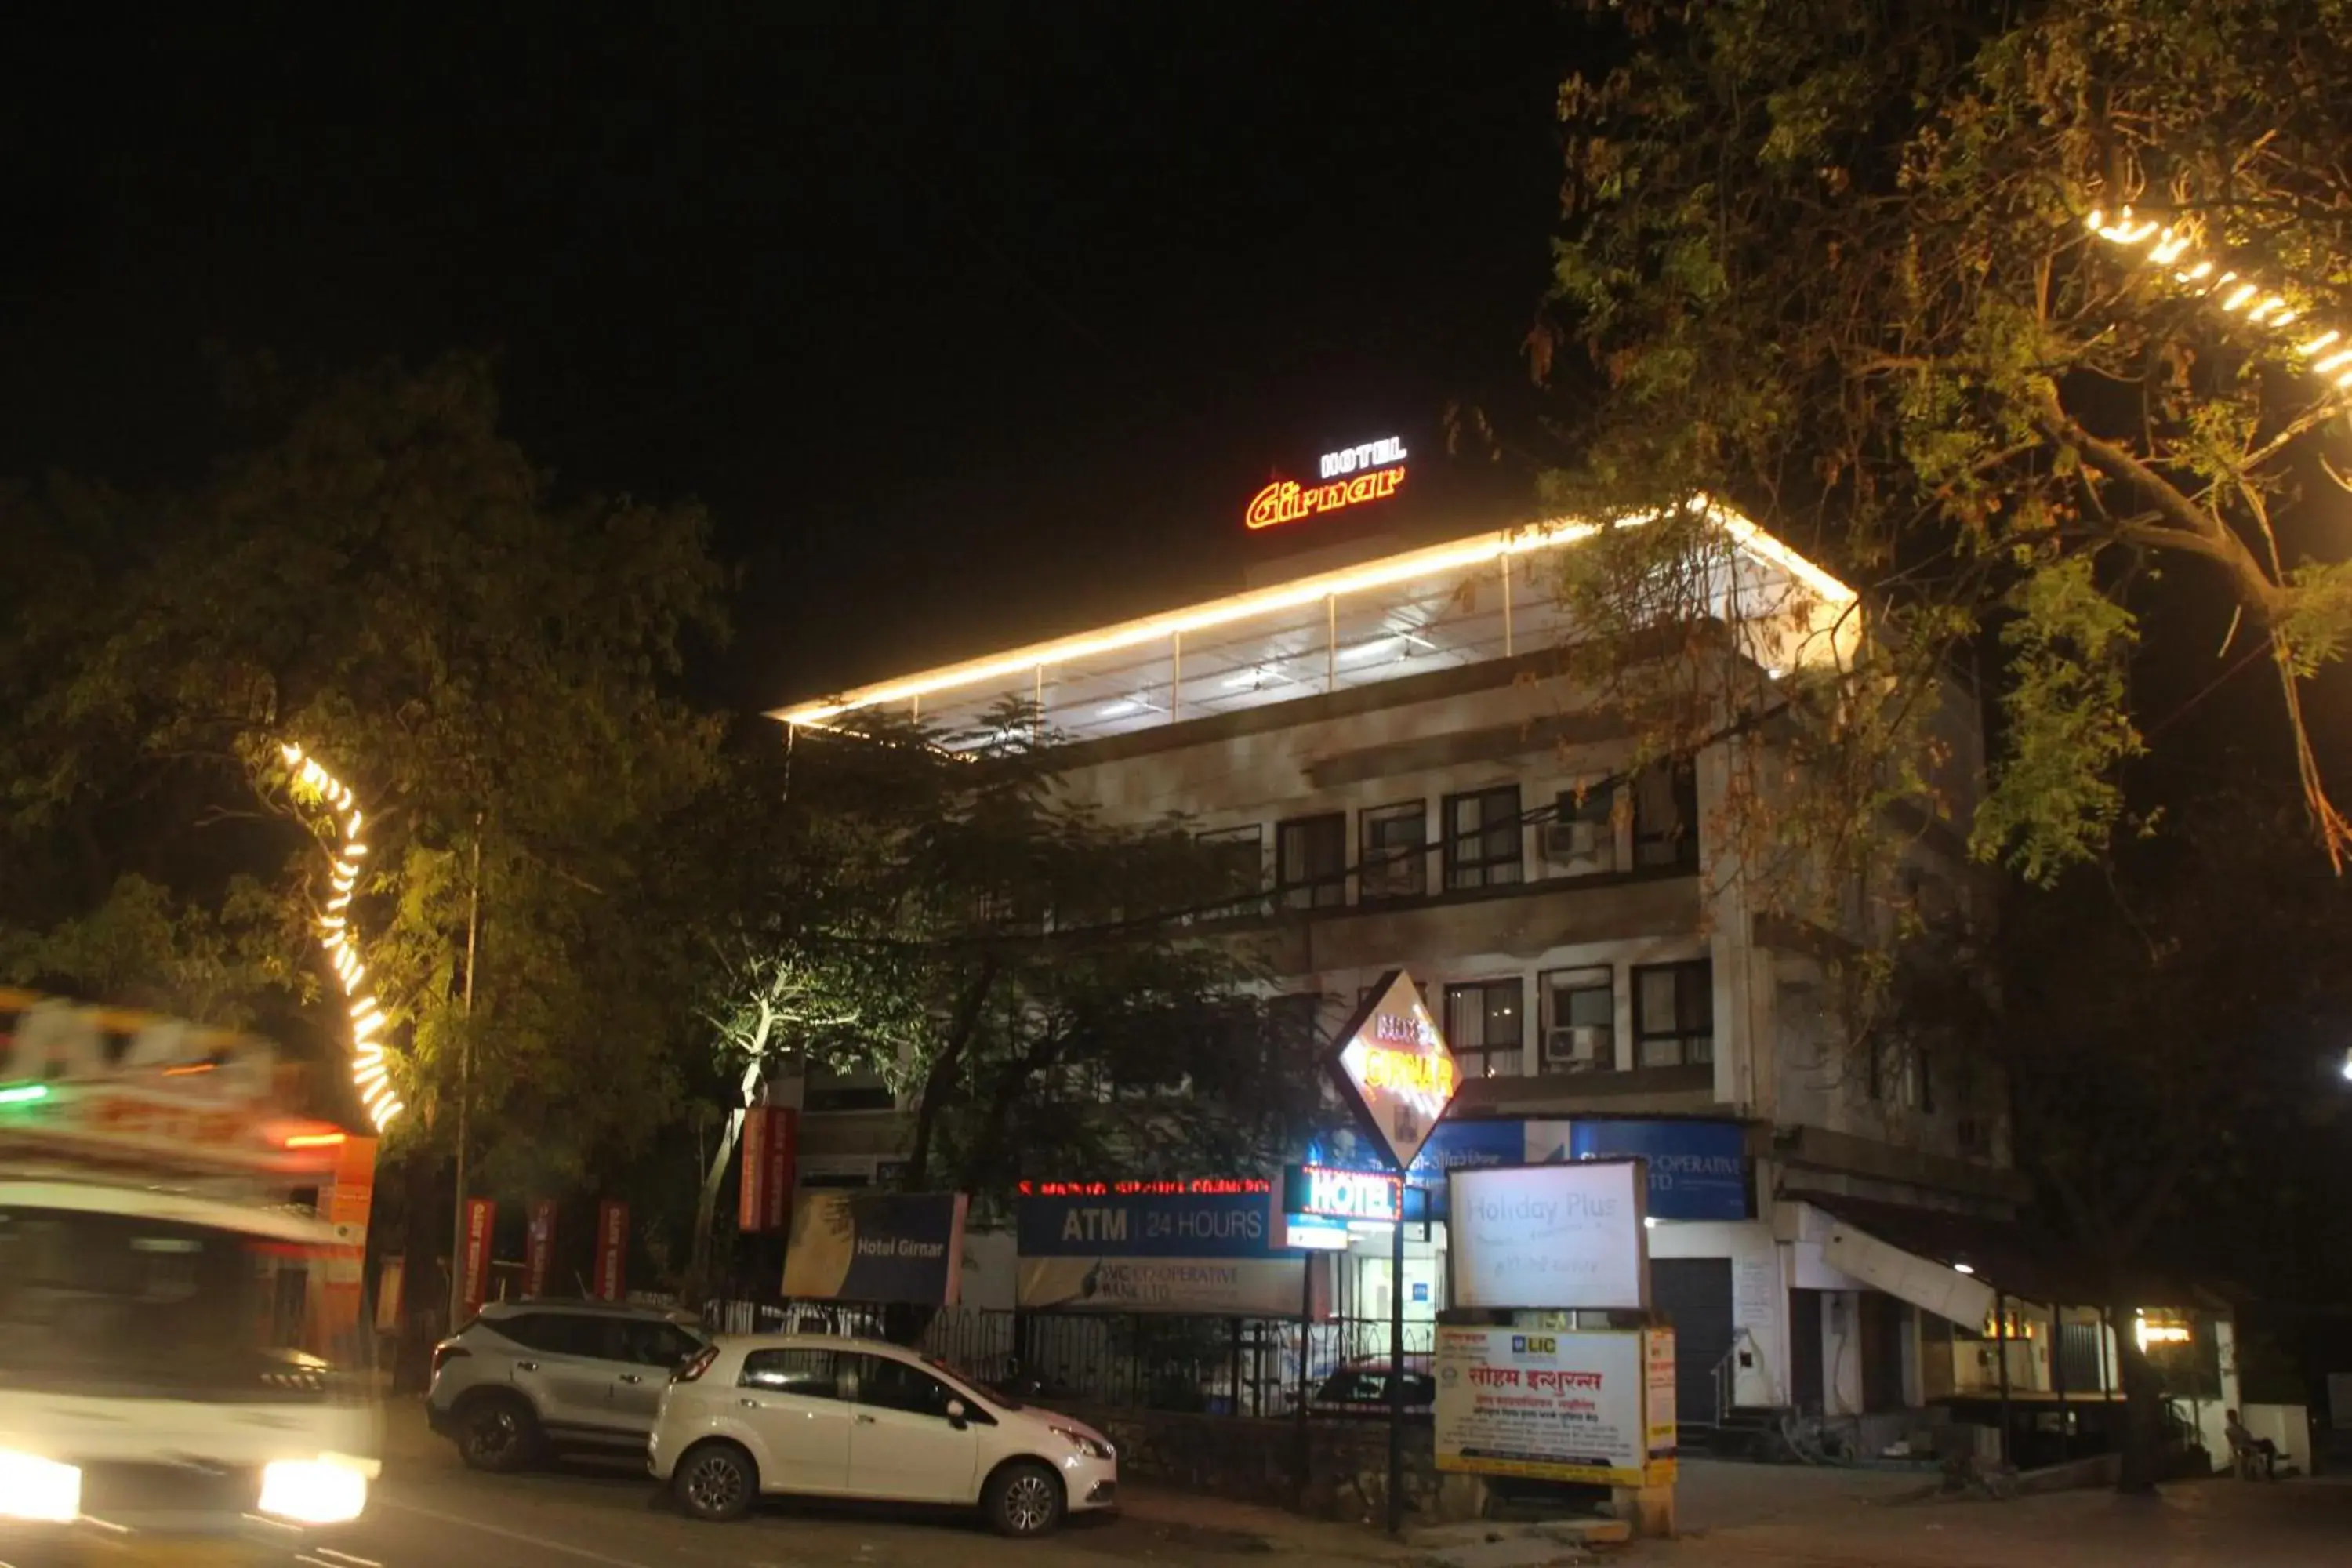 Property Building in Hotel Girnar